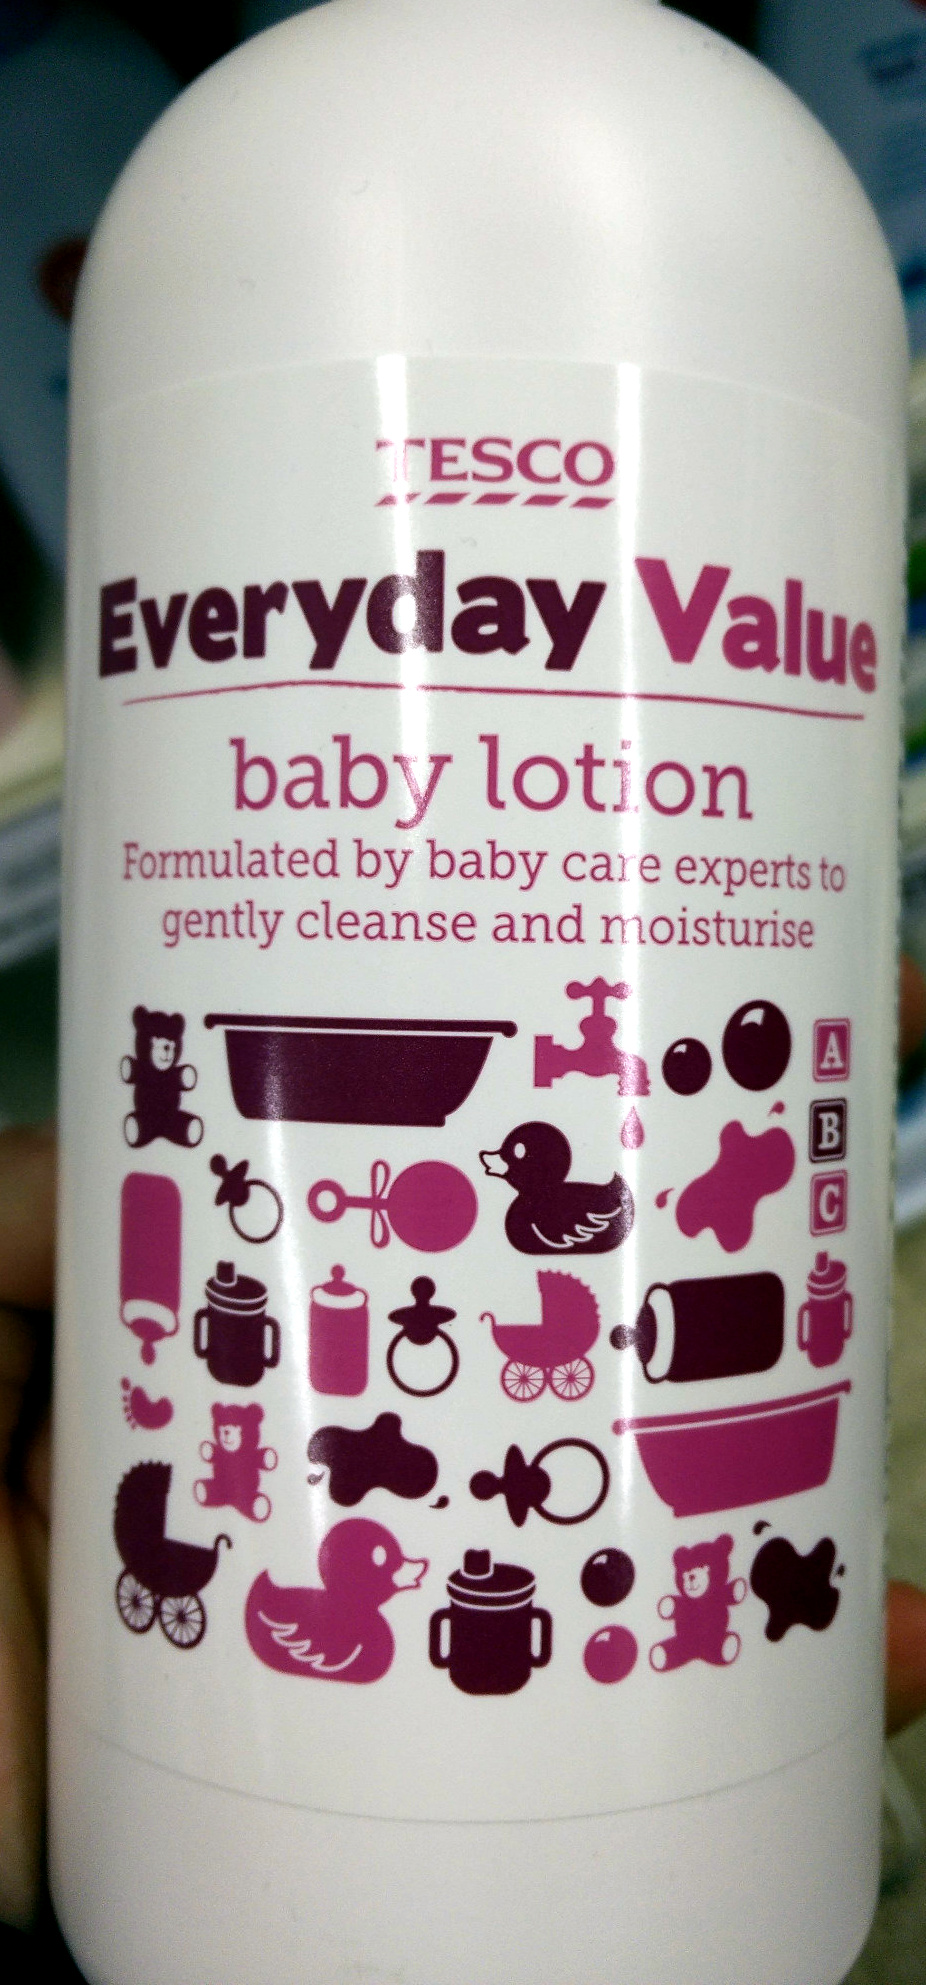 Everyday Value baby lotion - Produit - en